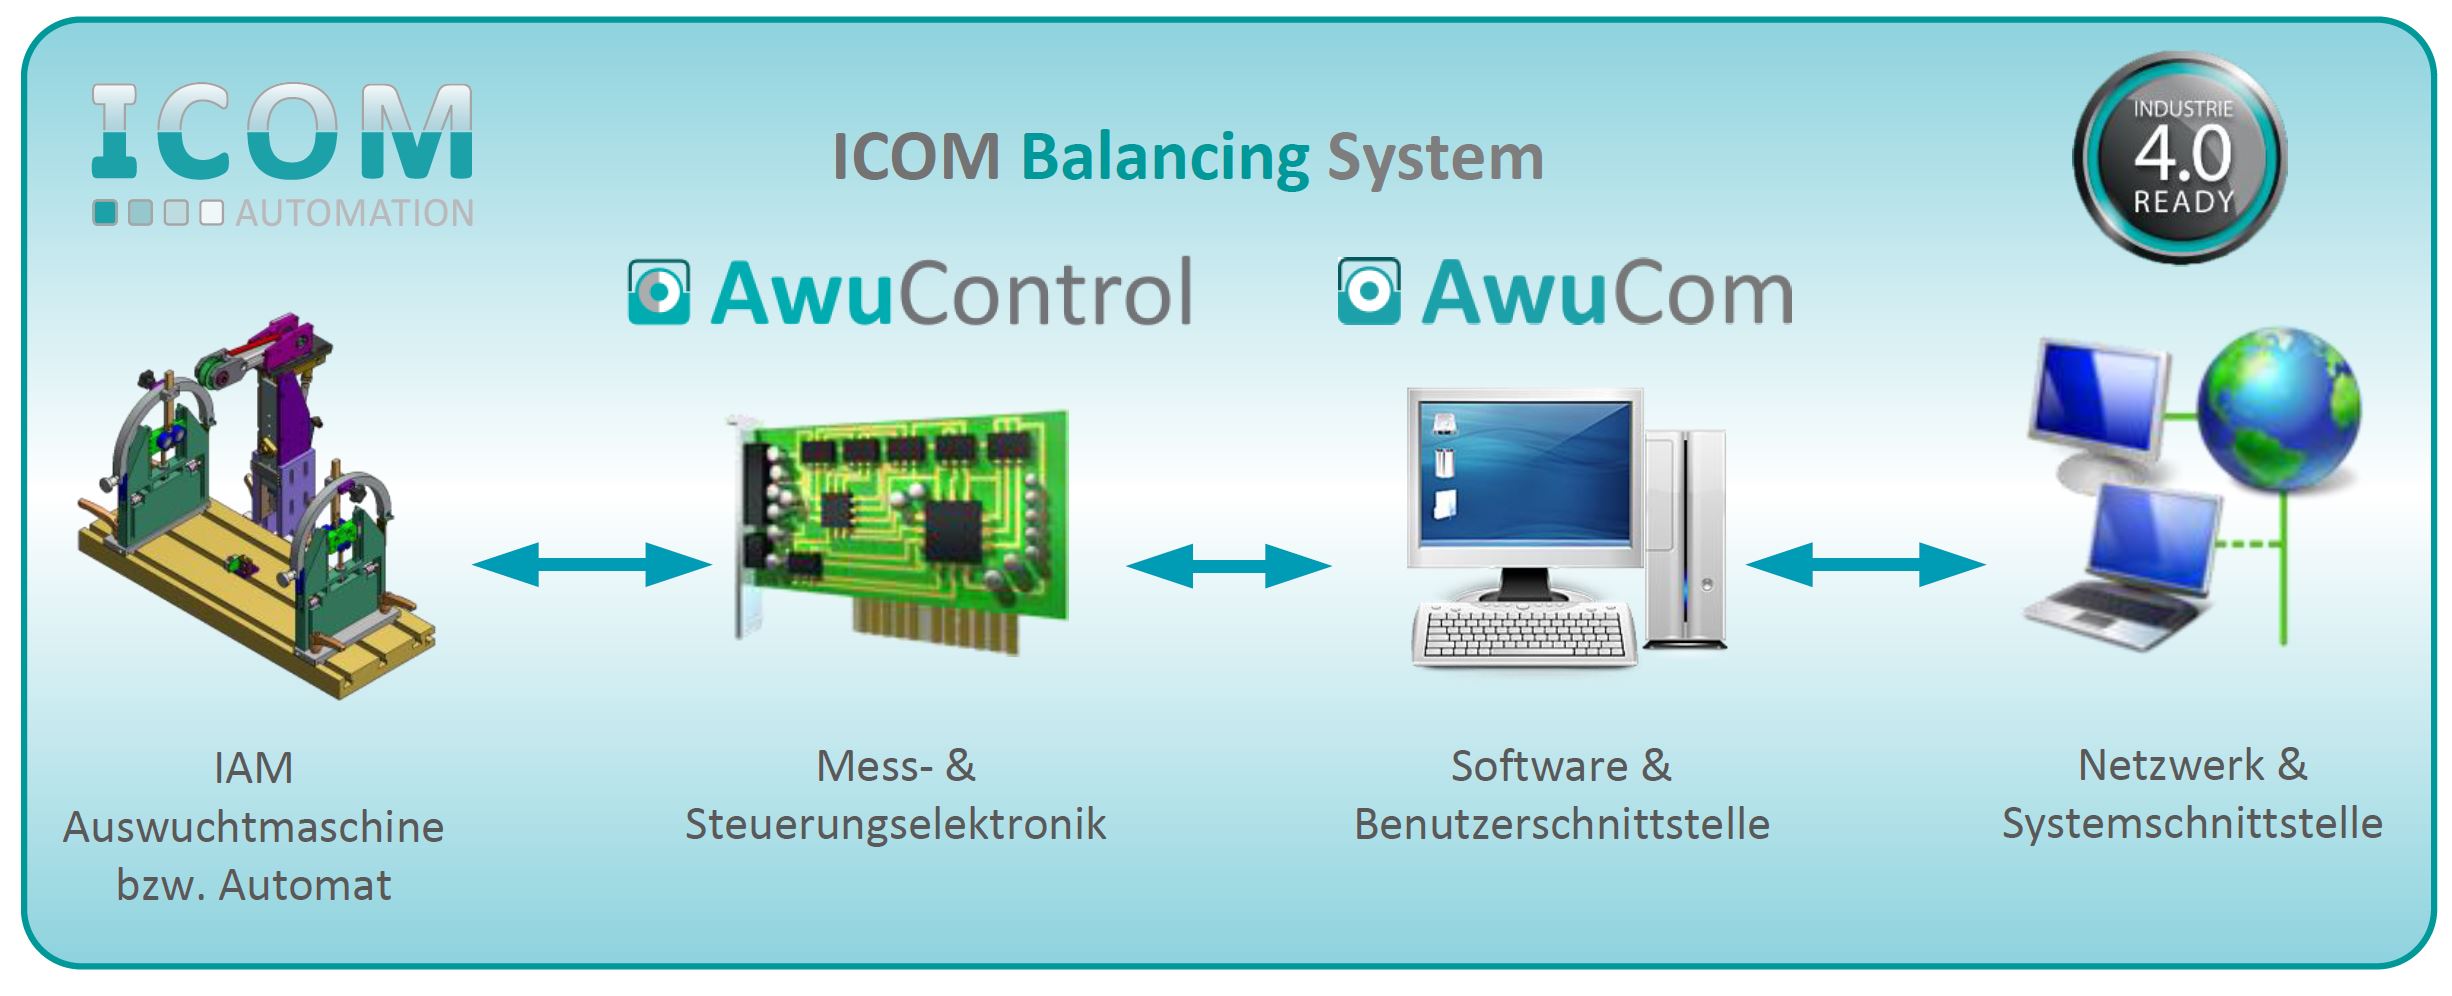 ICOM Balancing System - Übersicht